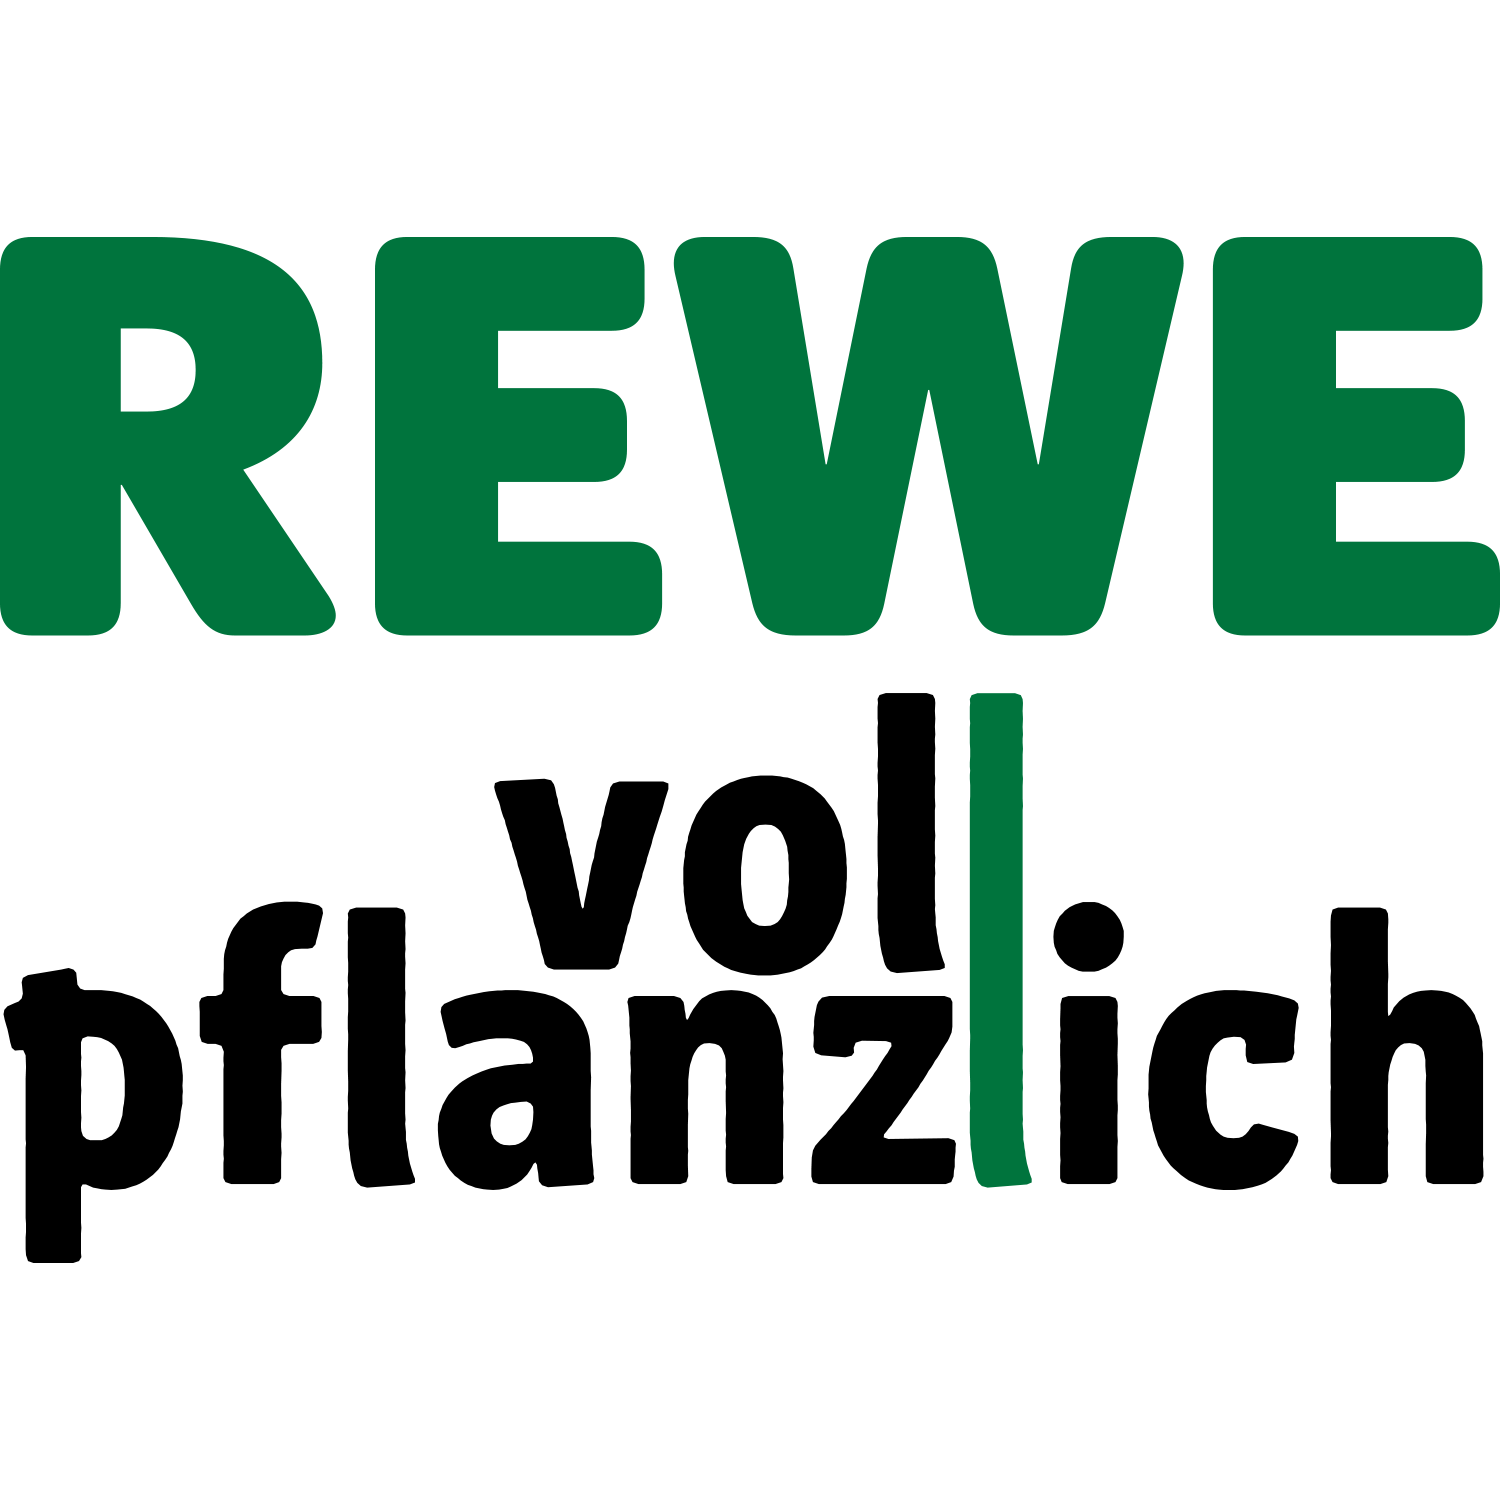 REWE voll pflanzlich in Berlin - Logo